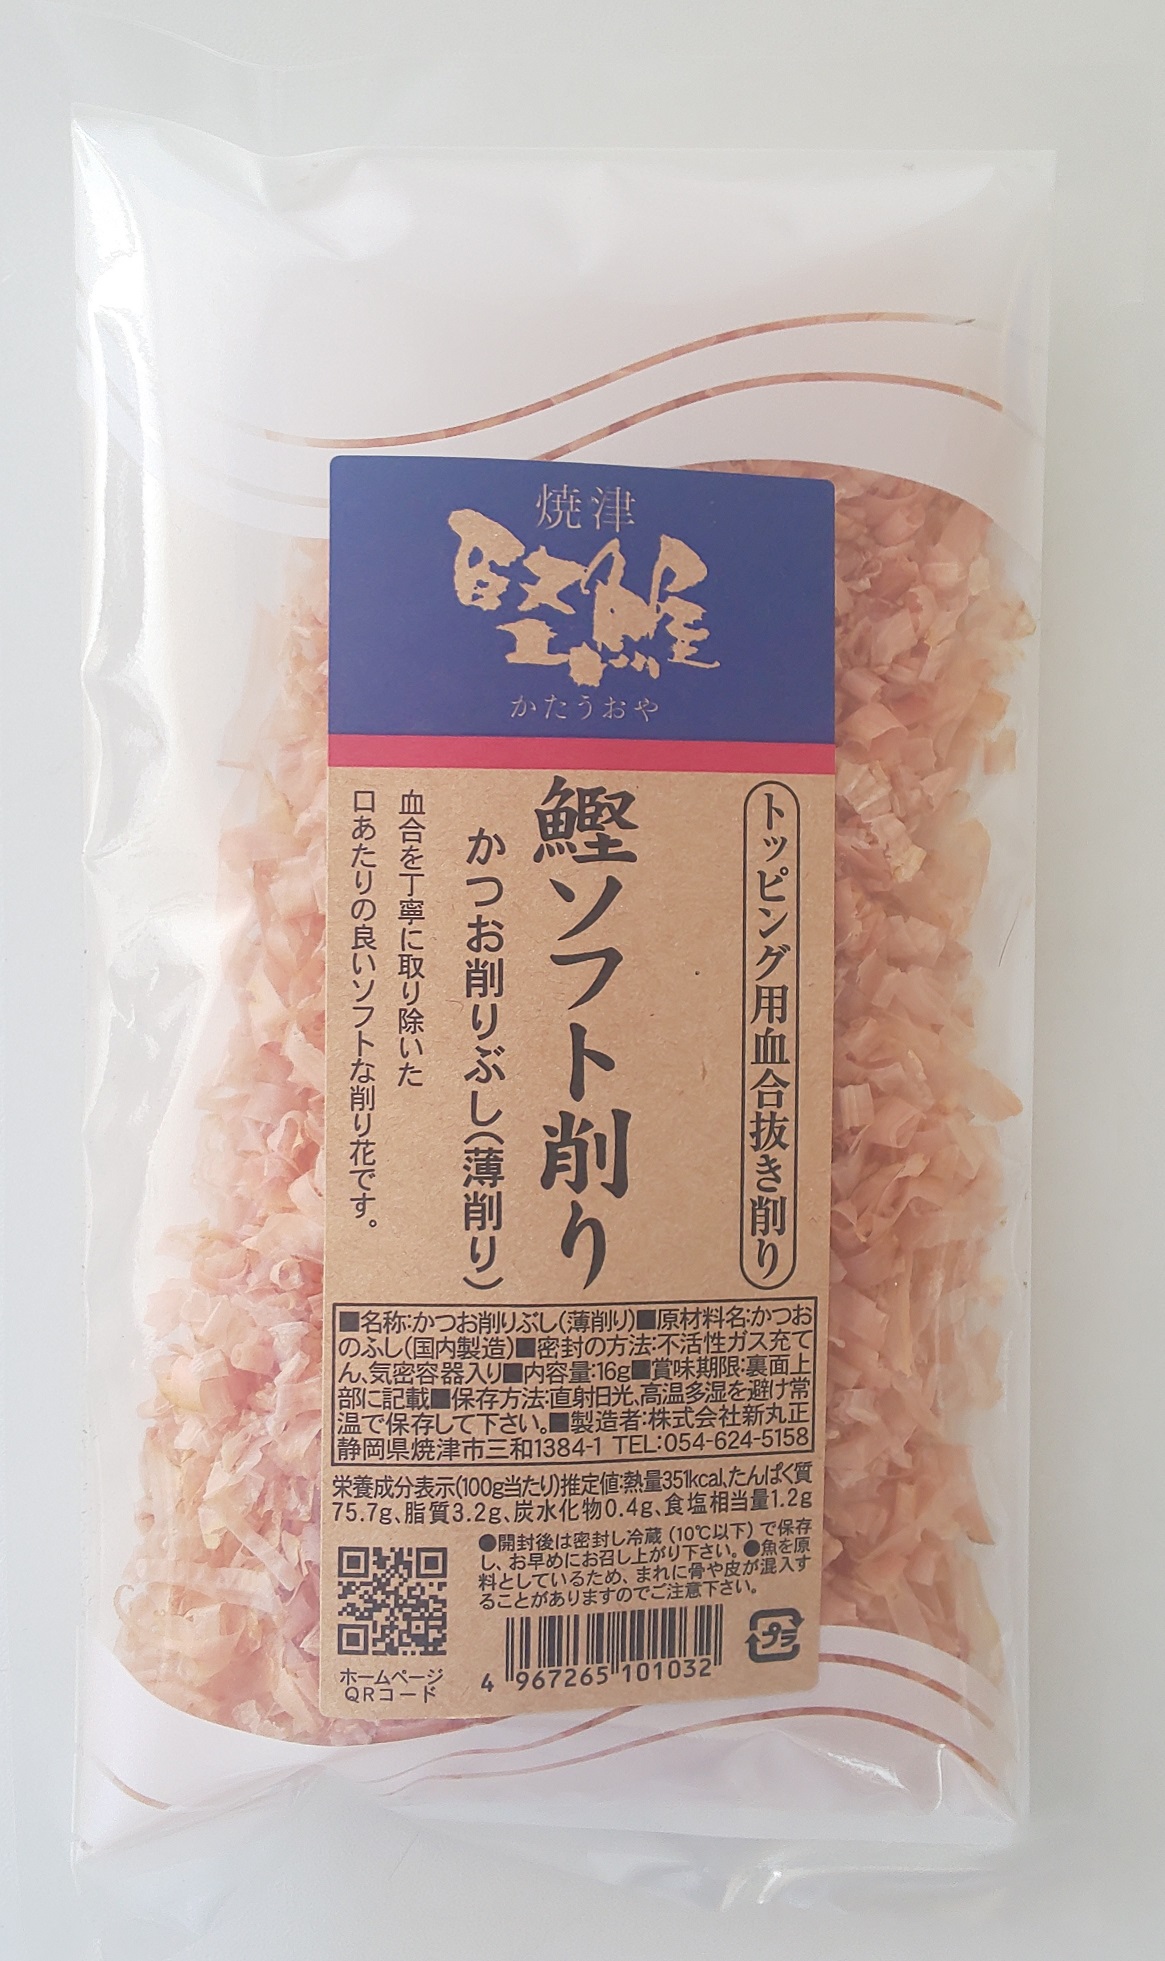 Ktsuo Soft Kezuri 16g (Dried bonito shavings)